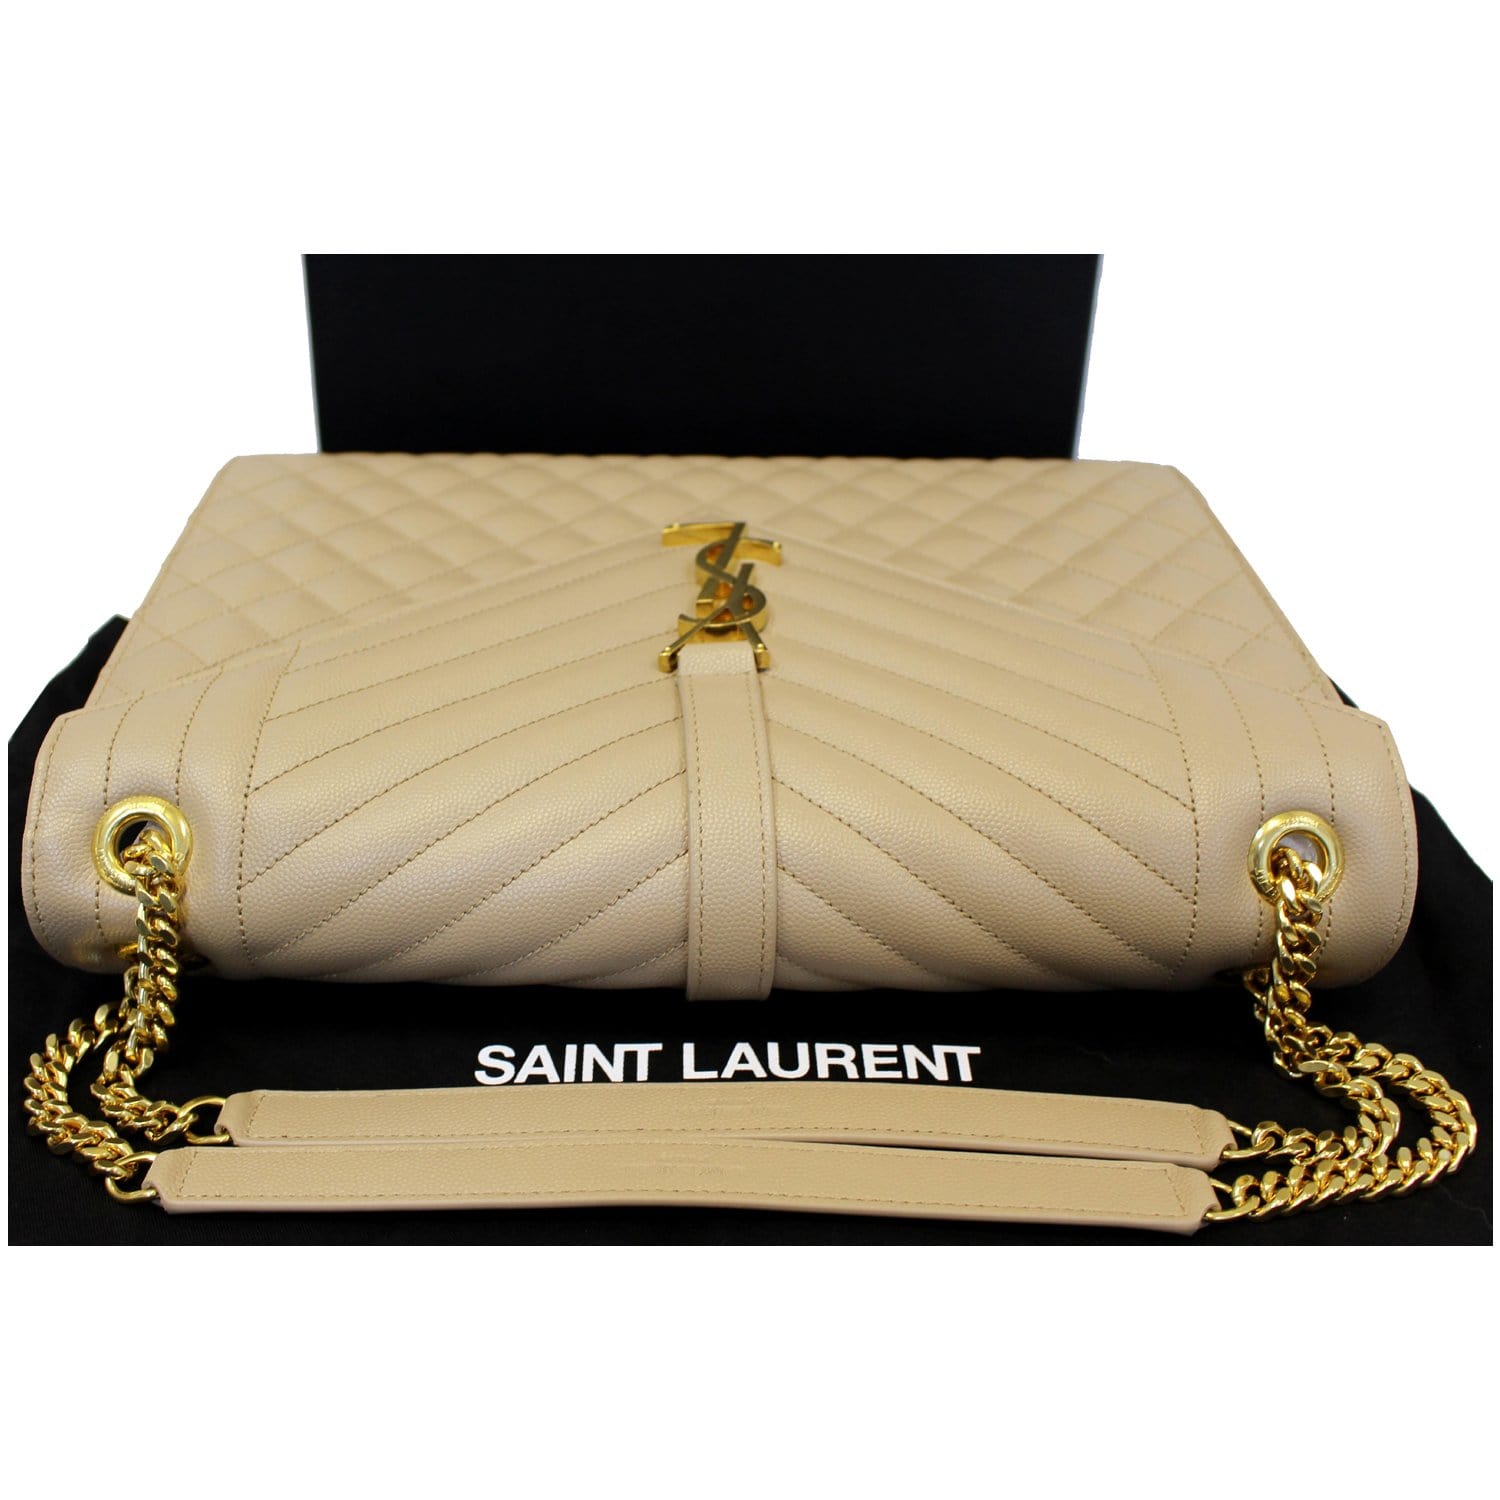 Saint Laurent Monogram Embossed Dark Beige Leather Clutch Bag New